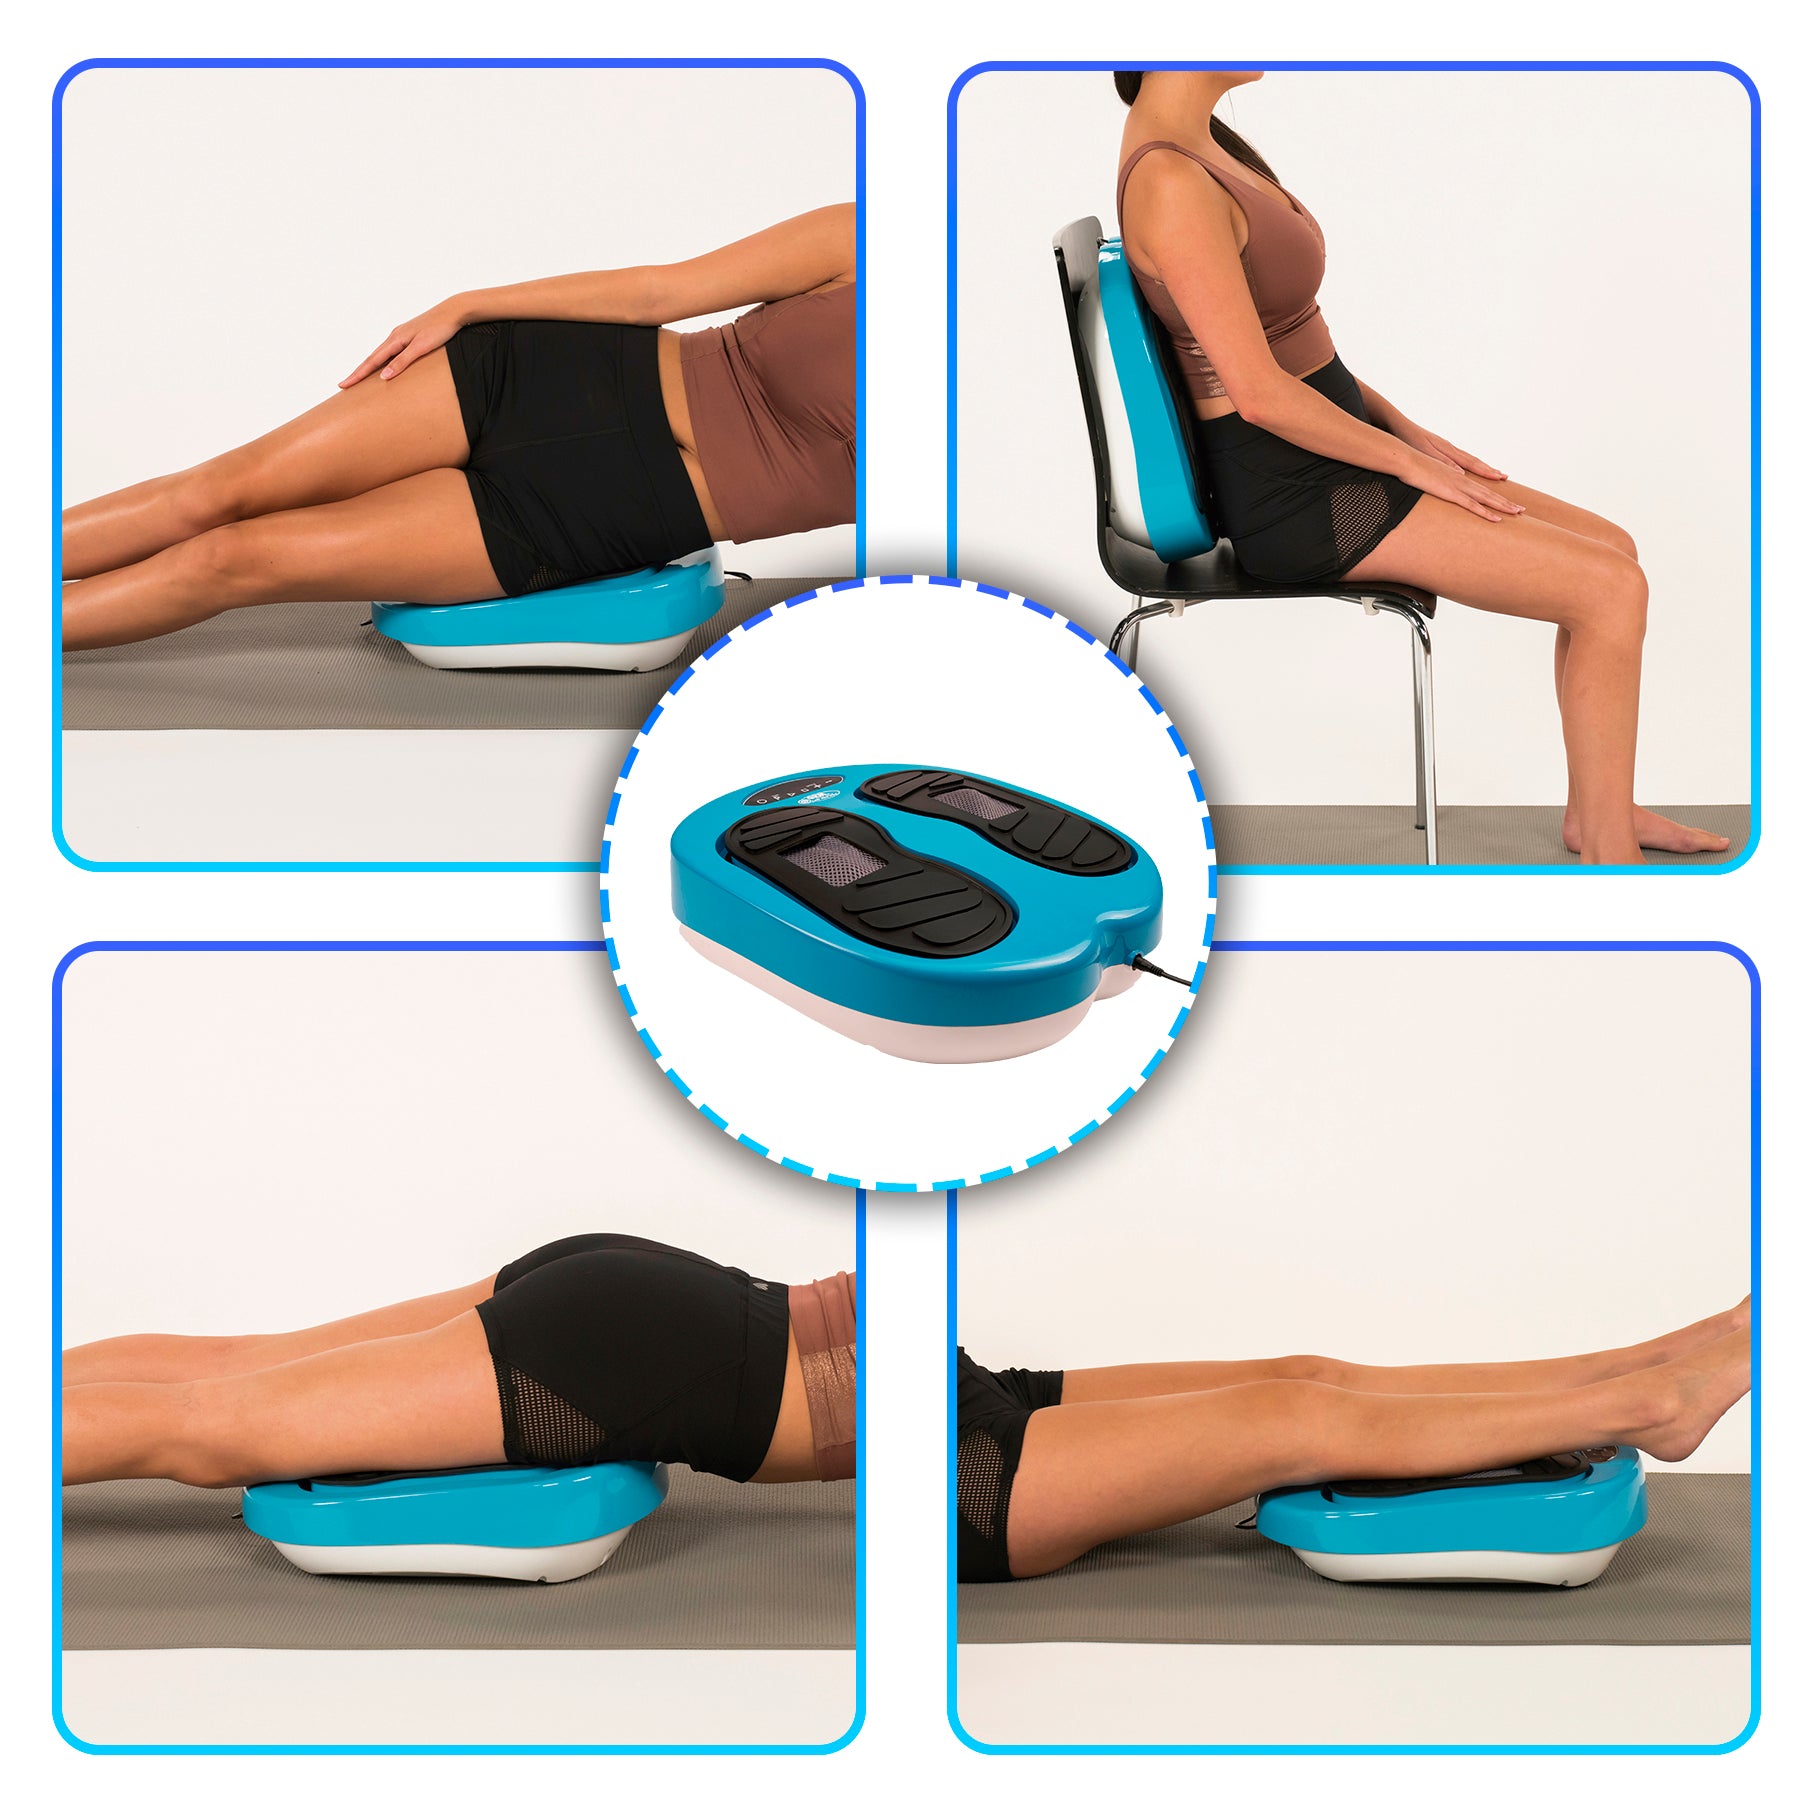 Gymform Leg Action PLATINUM| Professionele voet en benen massage | – Direct